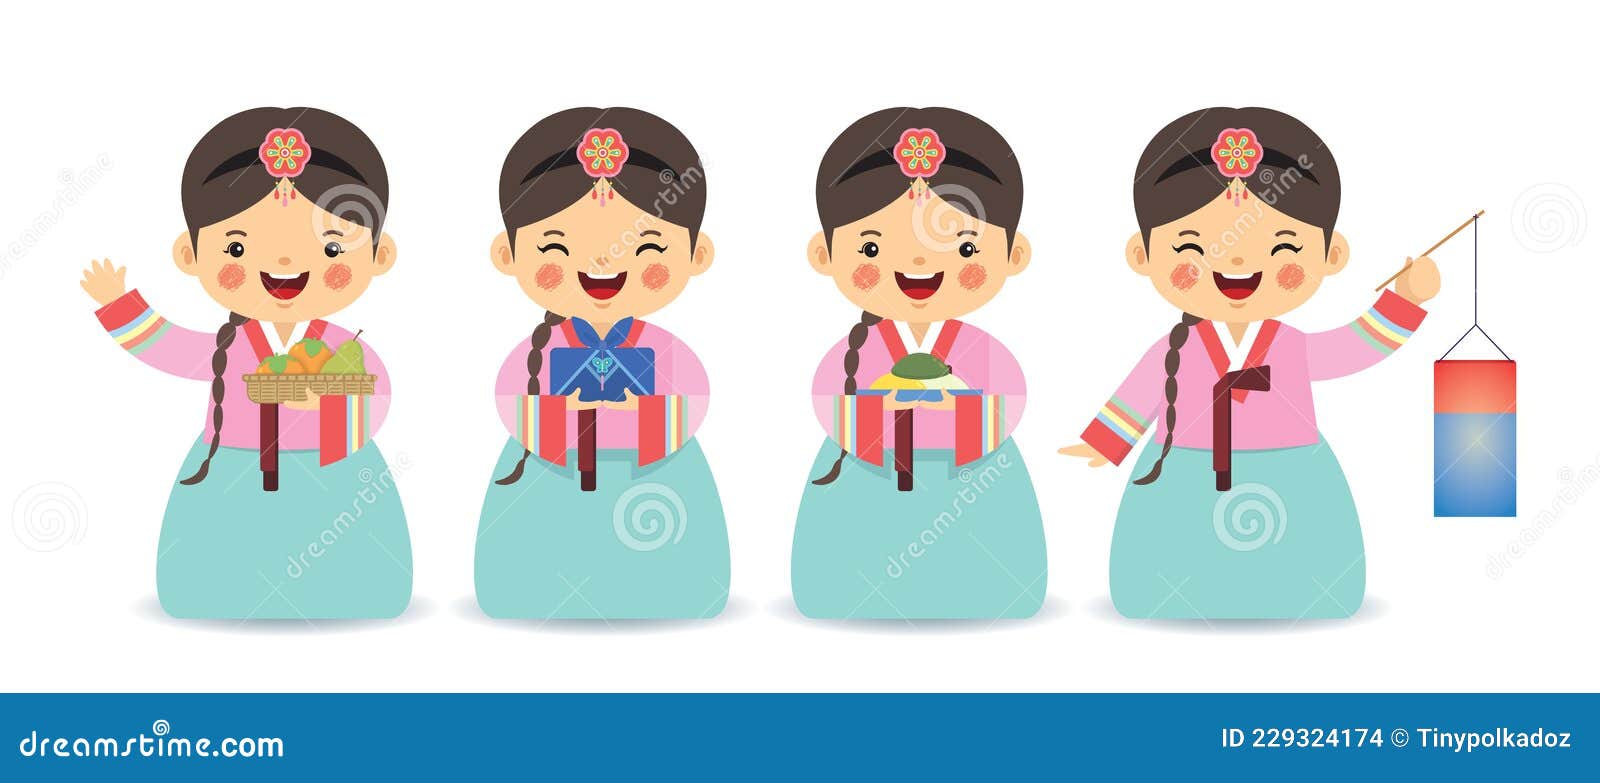 cartoon korean girl wearing hanbok with persimmons, gift, songpyeon & lantern